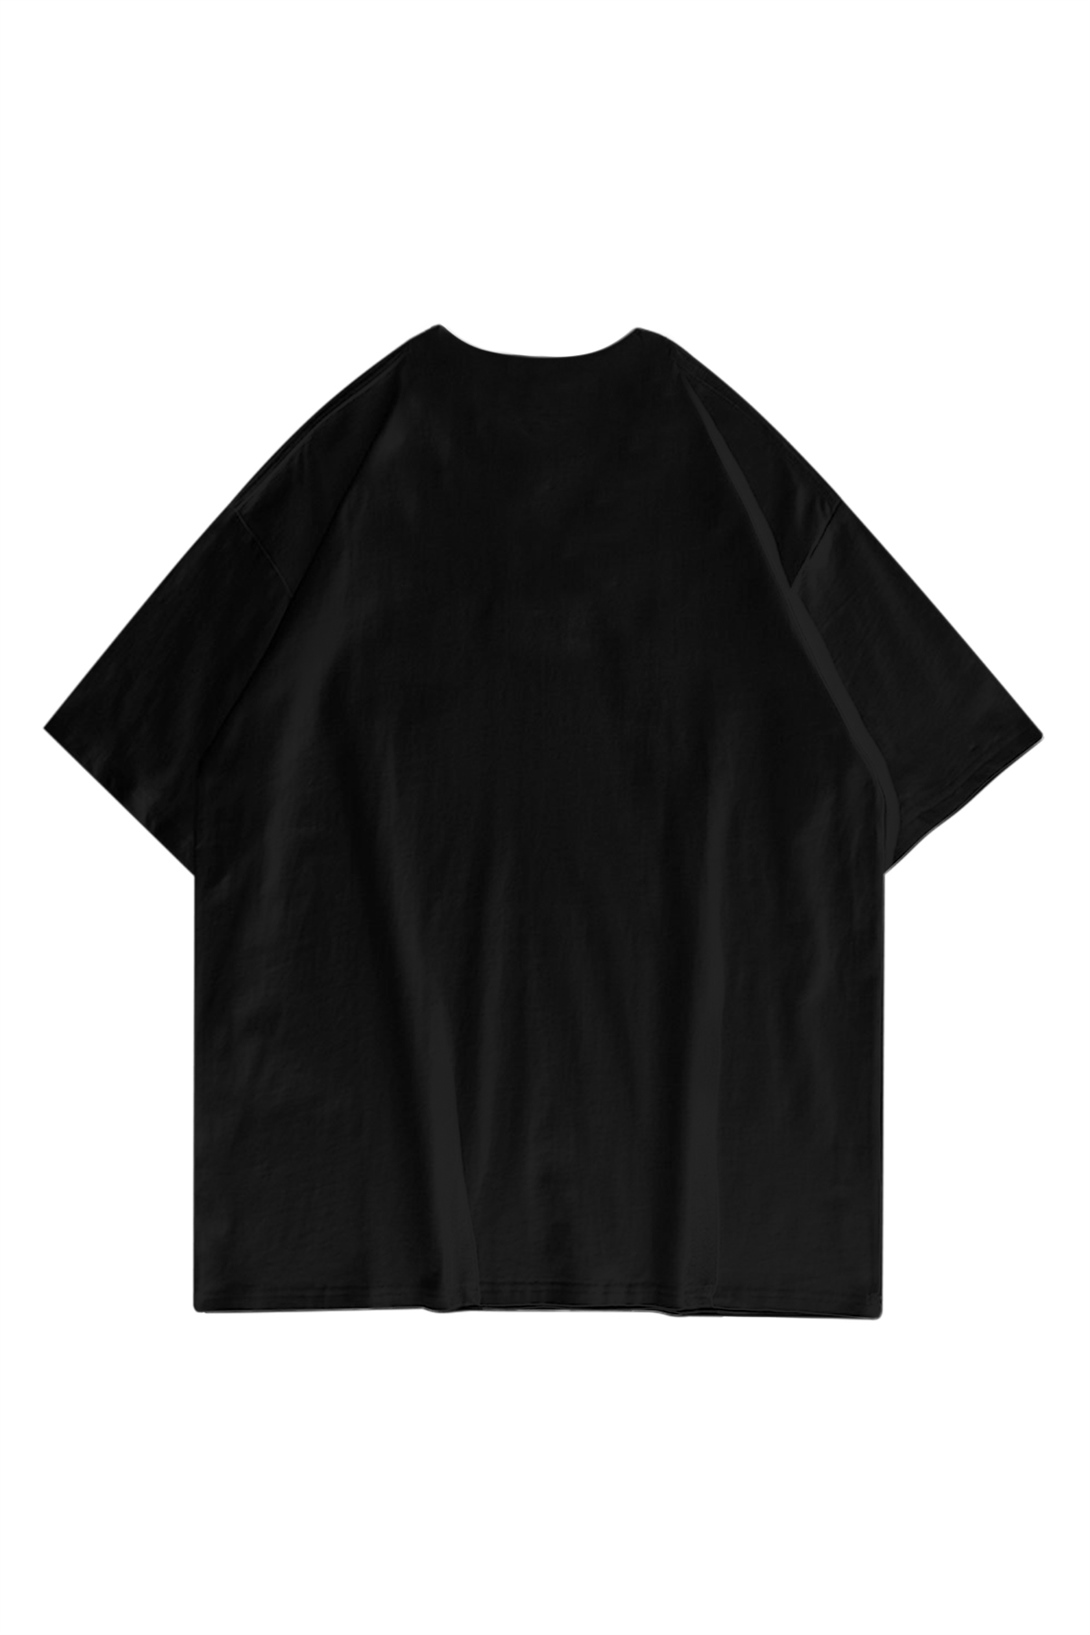 Trendiz Unisex Super Pixel Siyah Tshirt